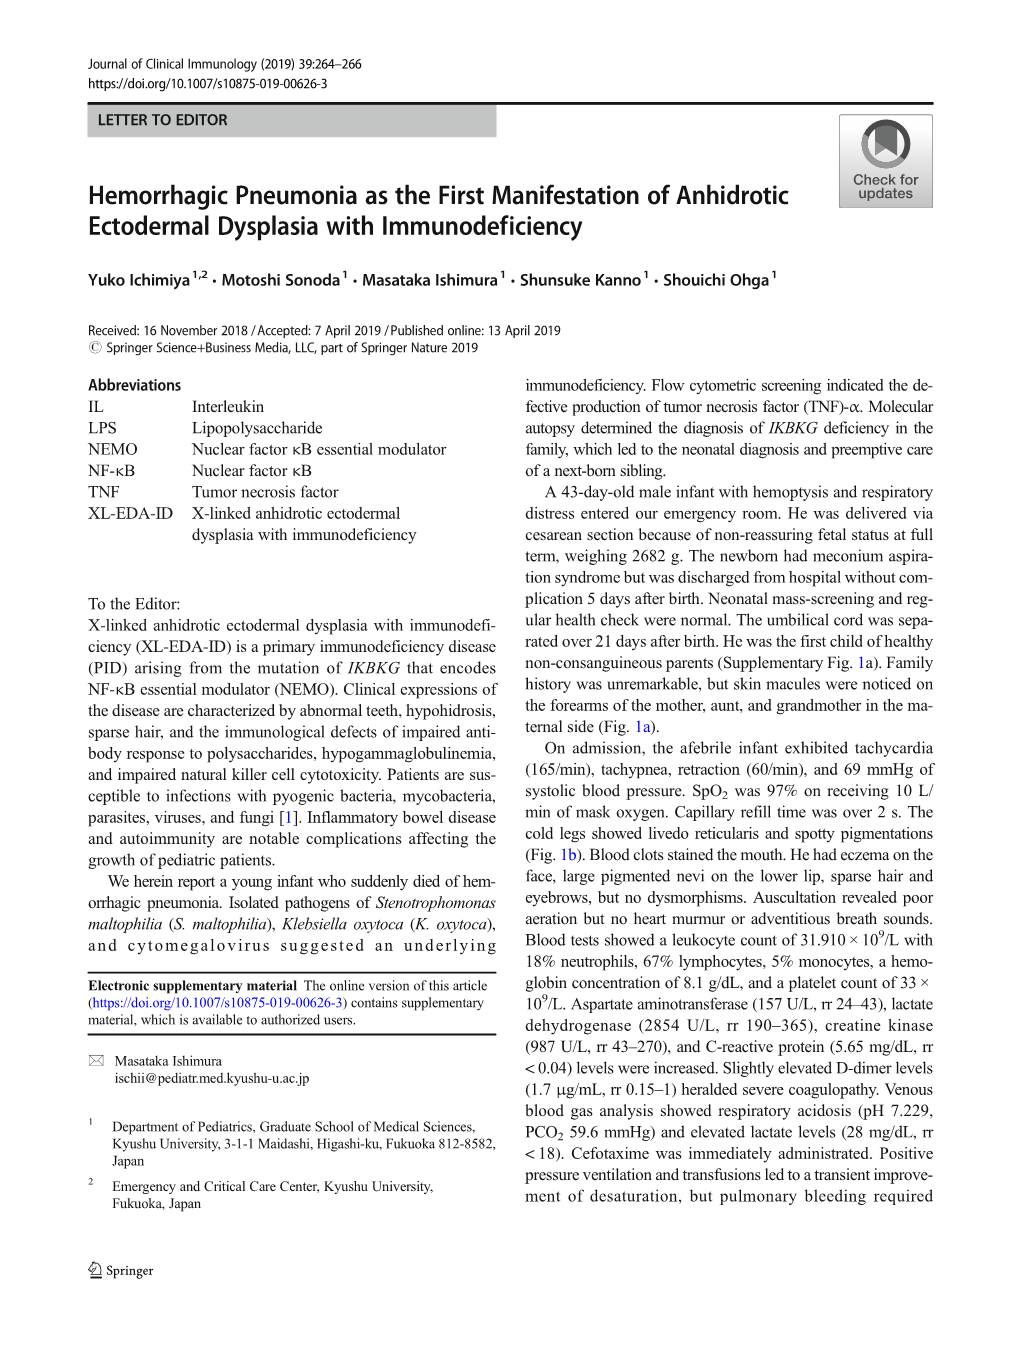 Hemorrhagic Pneumonia As the First Manifestation of Anhidrotic Ectodermal Dysplasia with Immunodeficiency